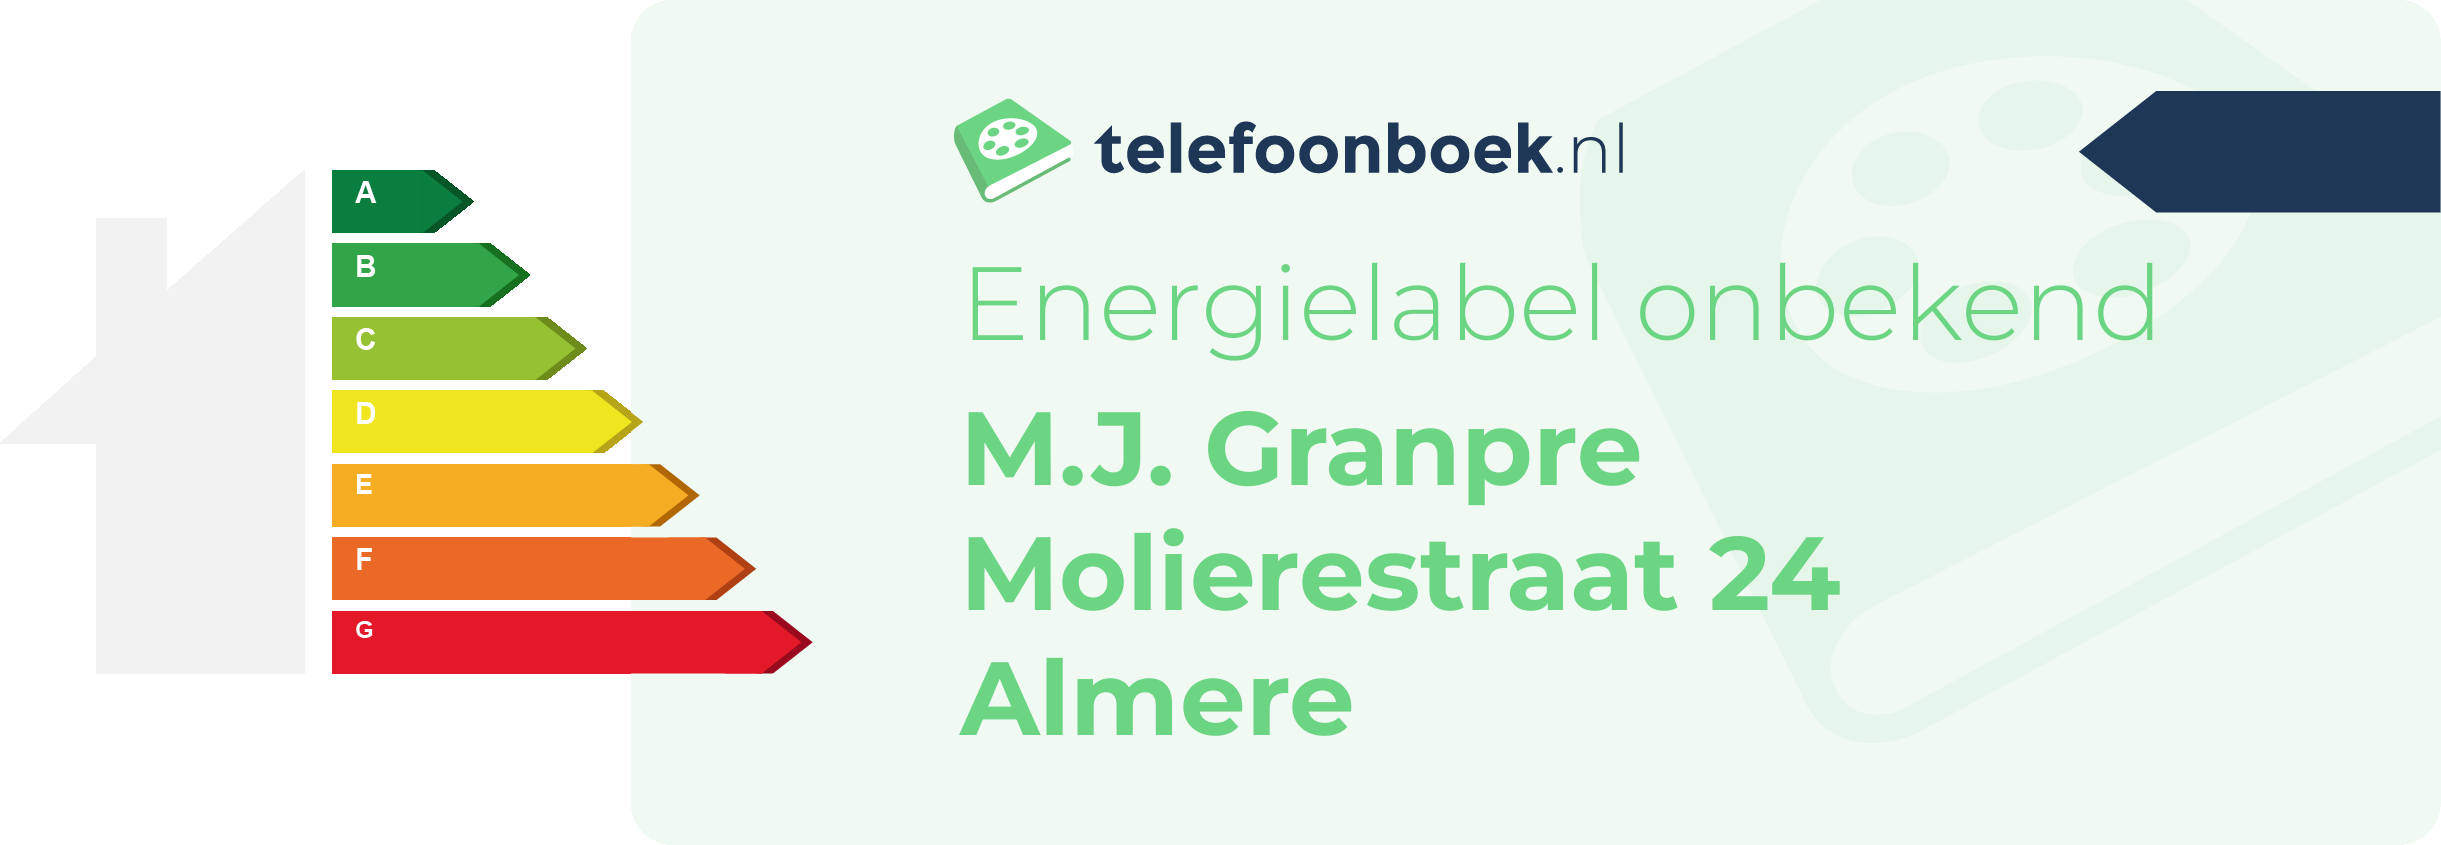 Energielabel M.J. Granpre Molierestraat 24 Almere